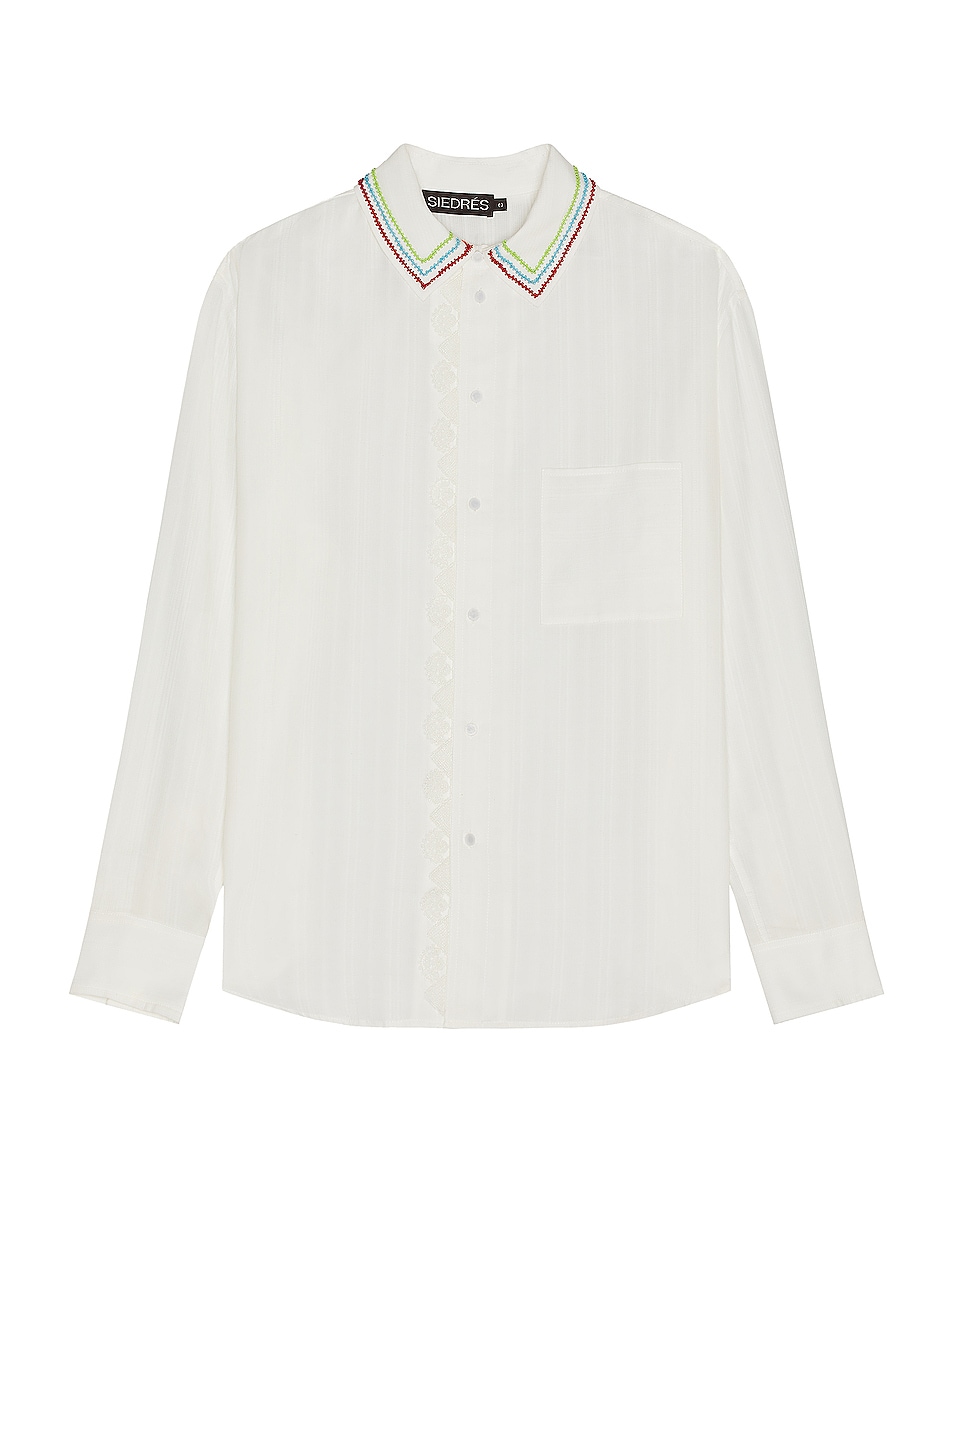 Image 1 of SIEDRES Beaded Collar Shirt in White